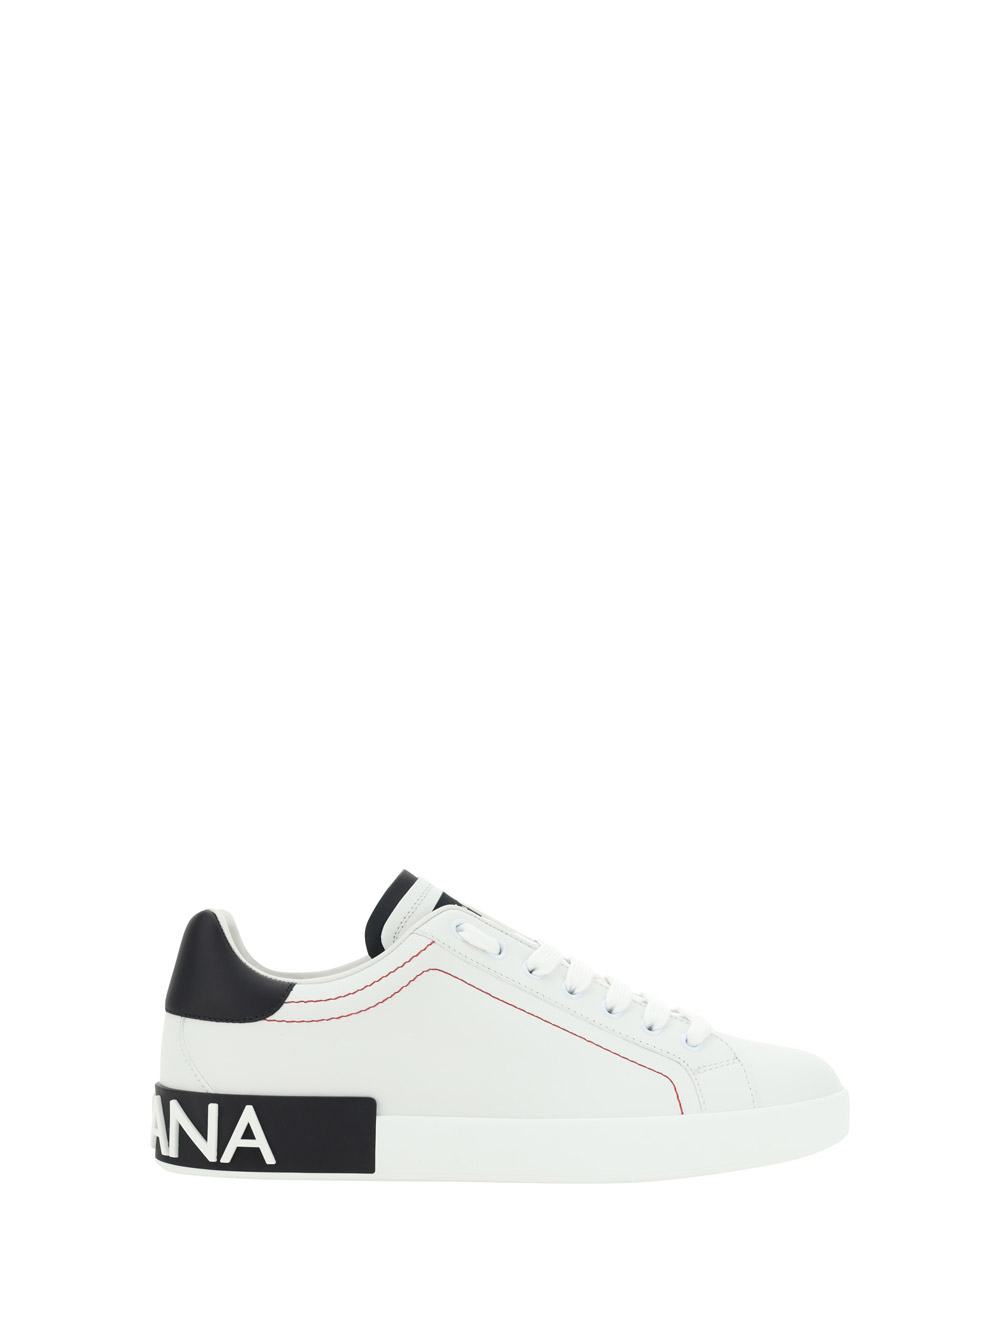 Dolce & Gabbana Sneakers In Bianco/nero